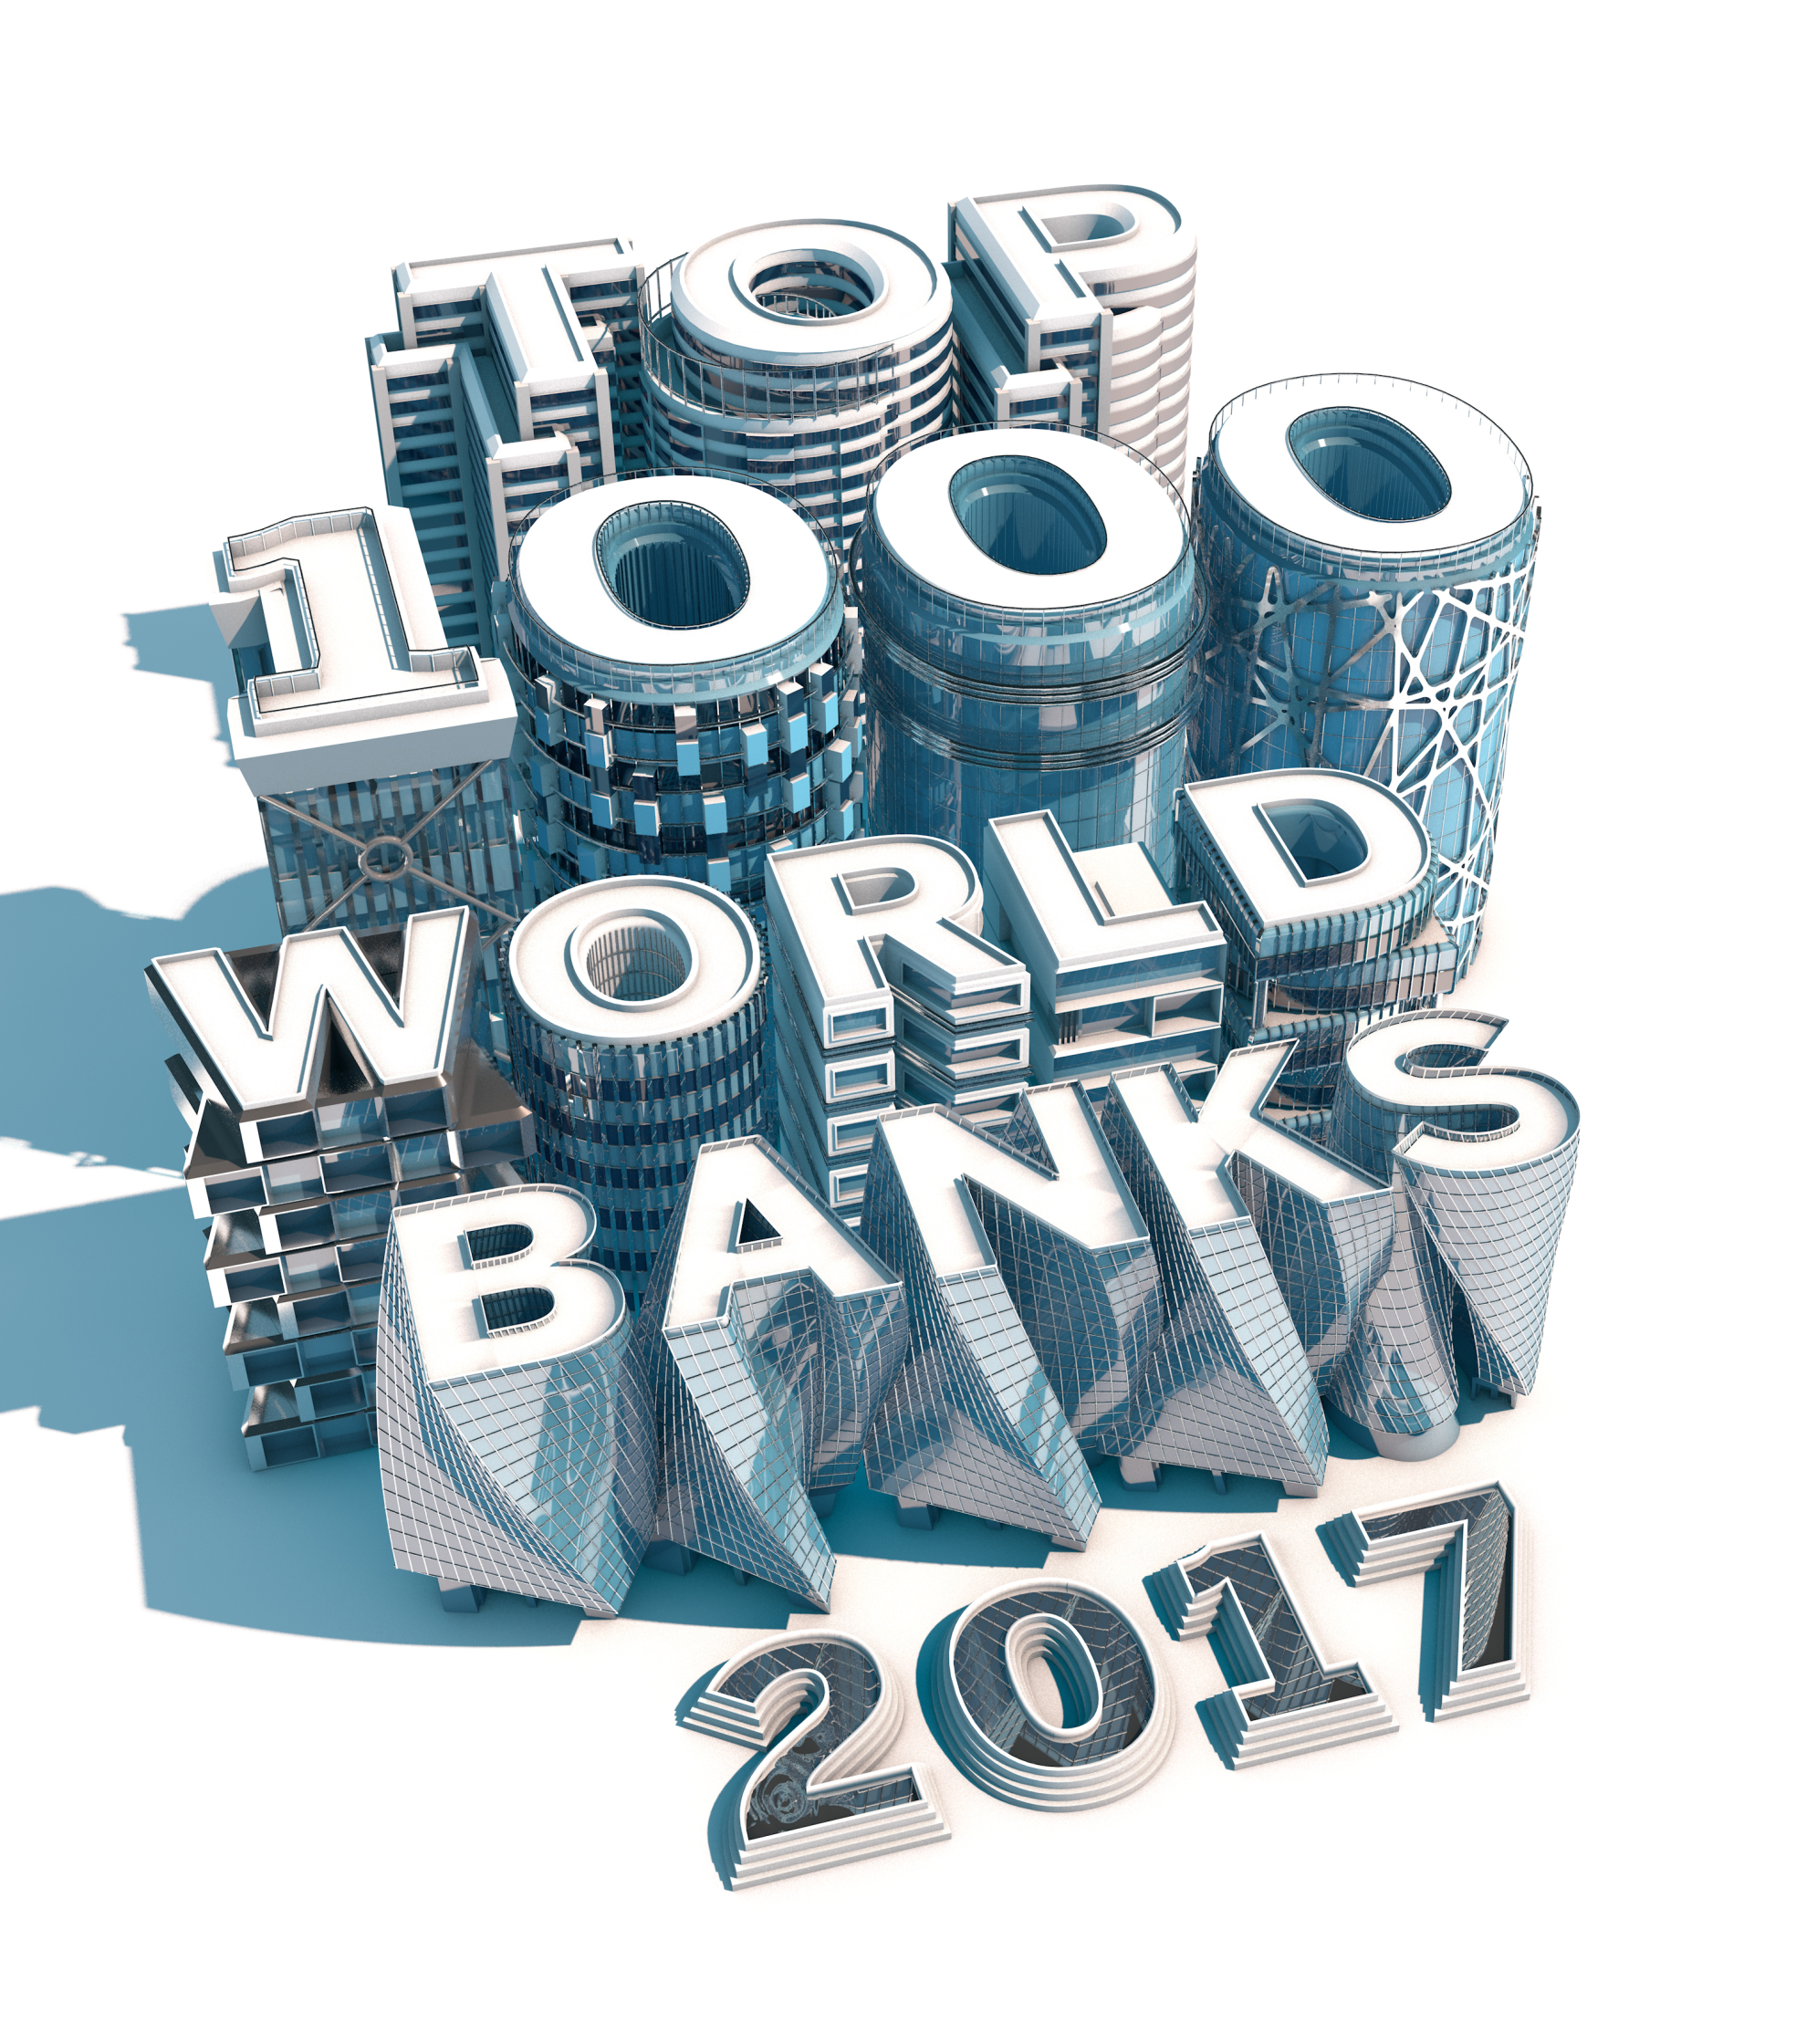 62.Top 1000 Banks 2017.jpg